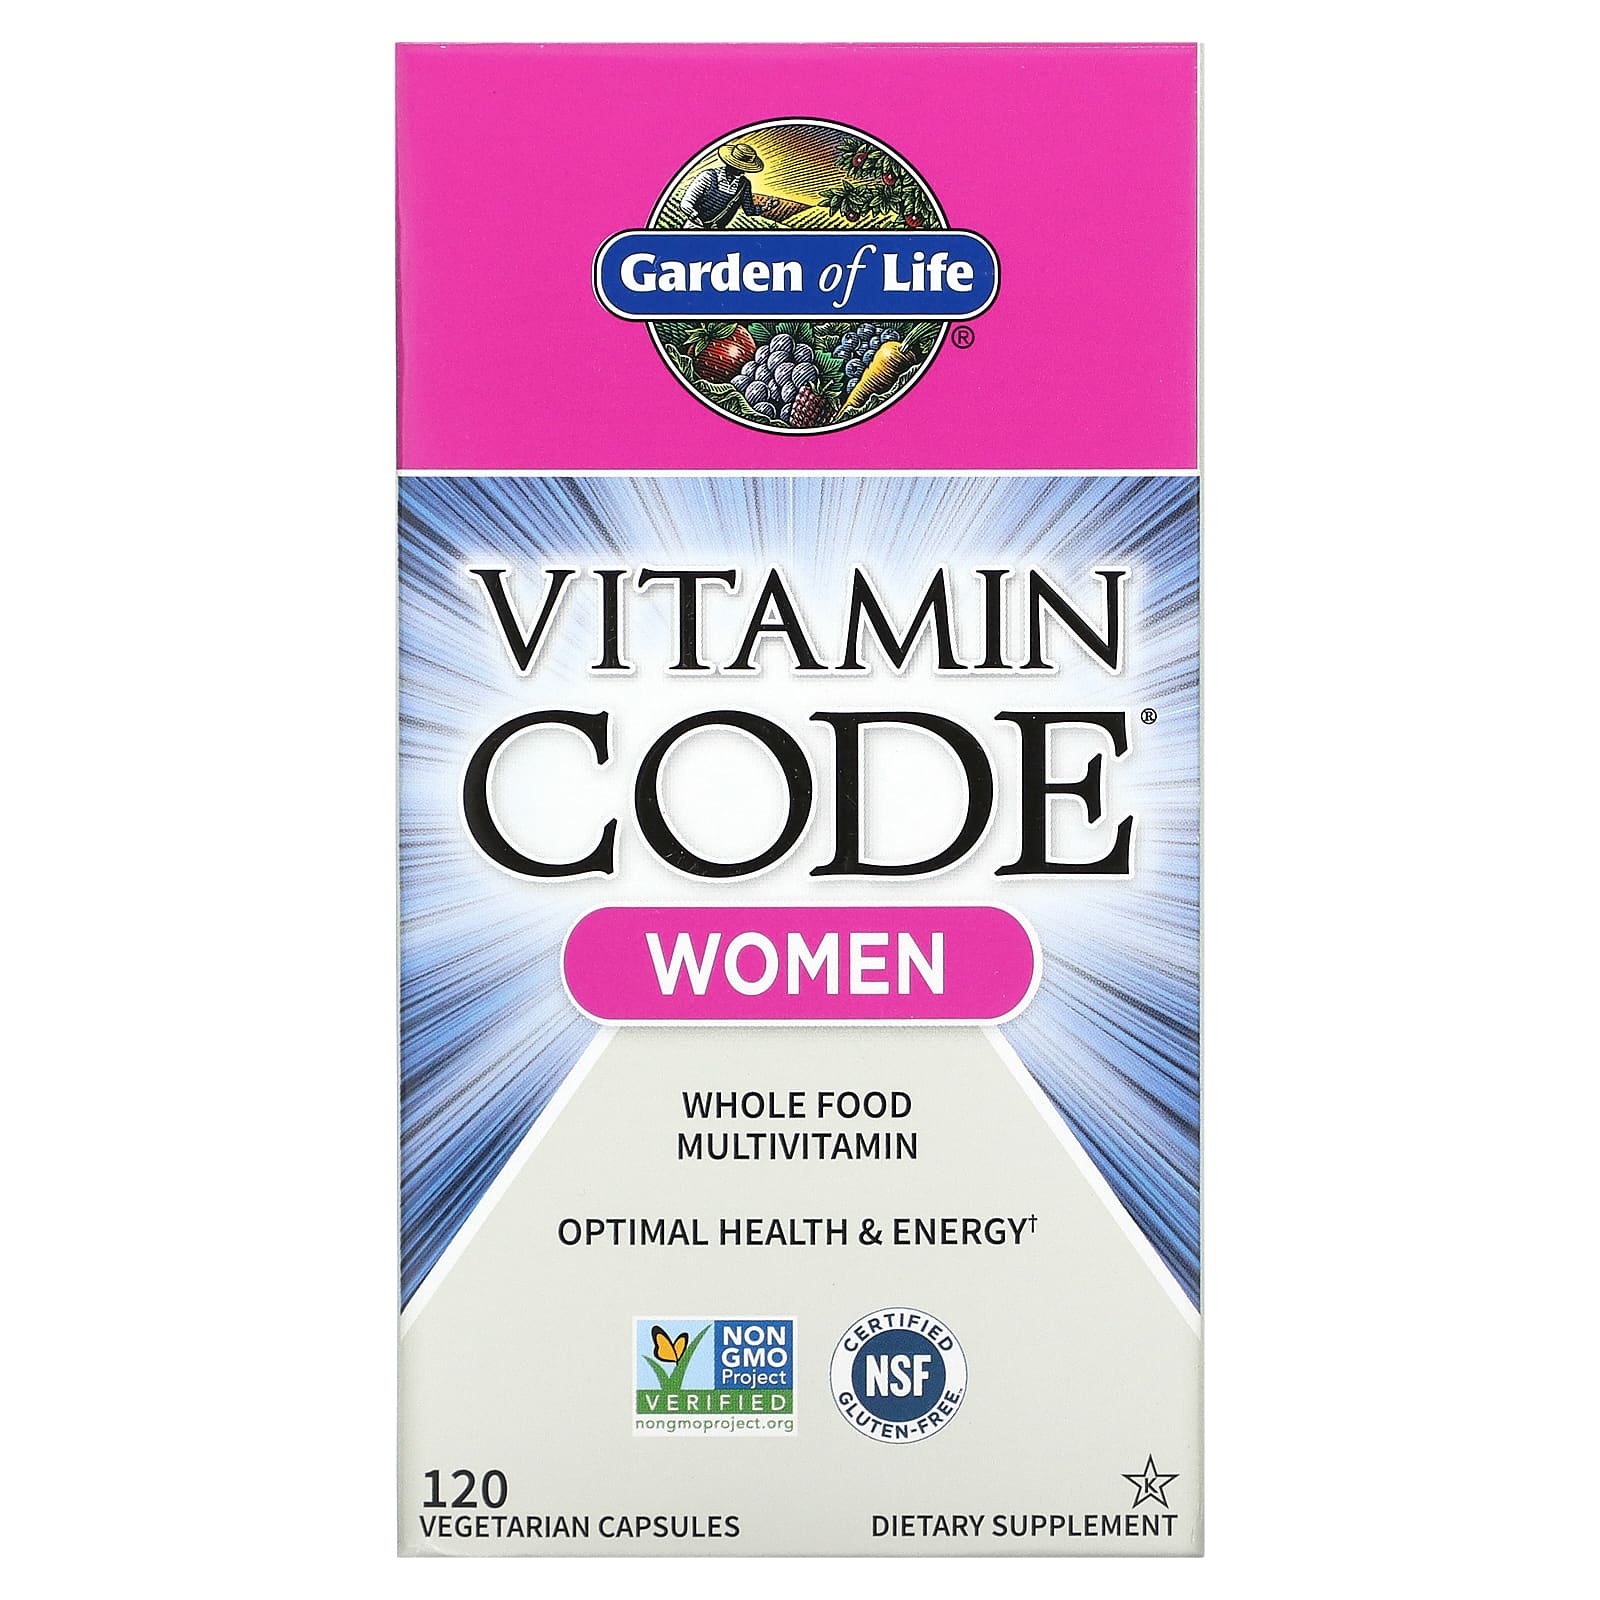 Garden of Life Vitamin Code, Whole Food Multivitamin For Women, 120 Vegetarian Capsules